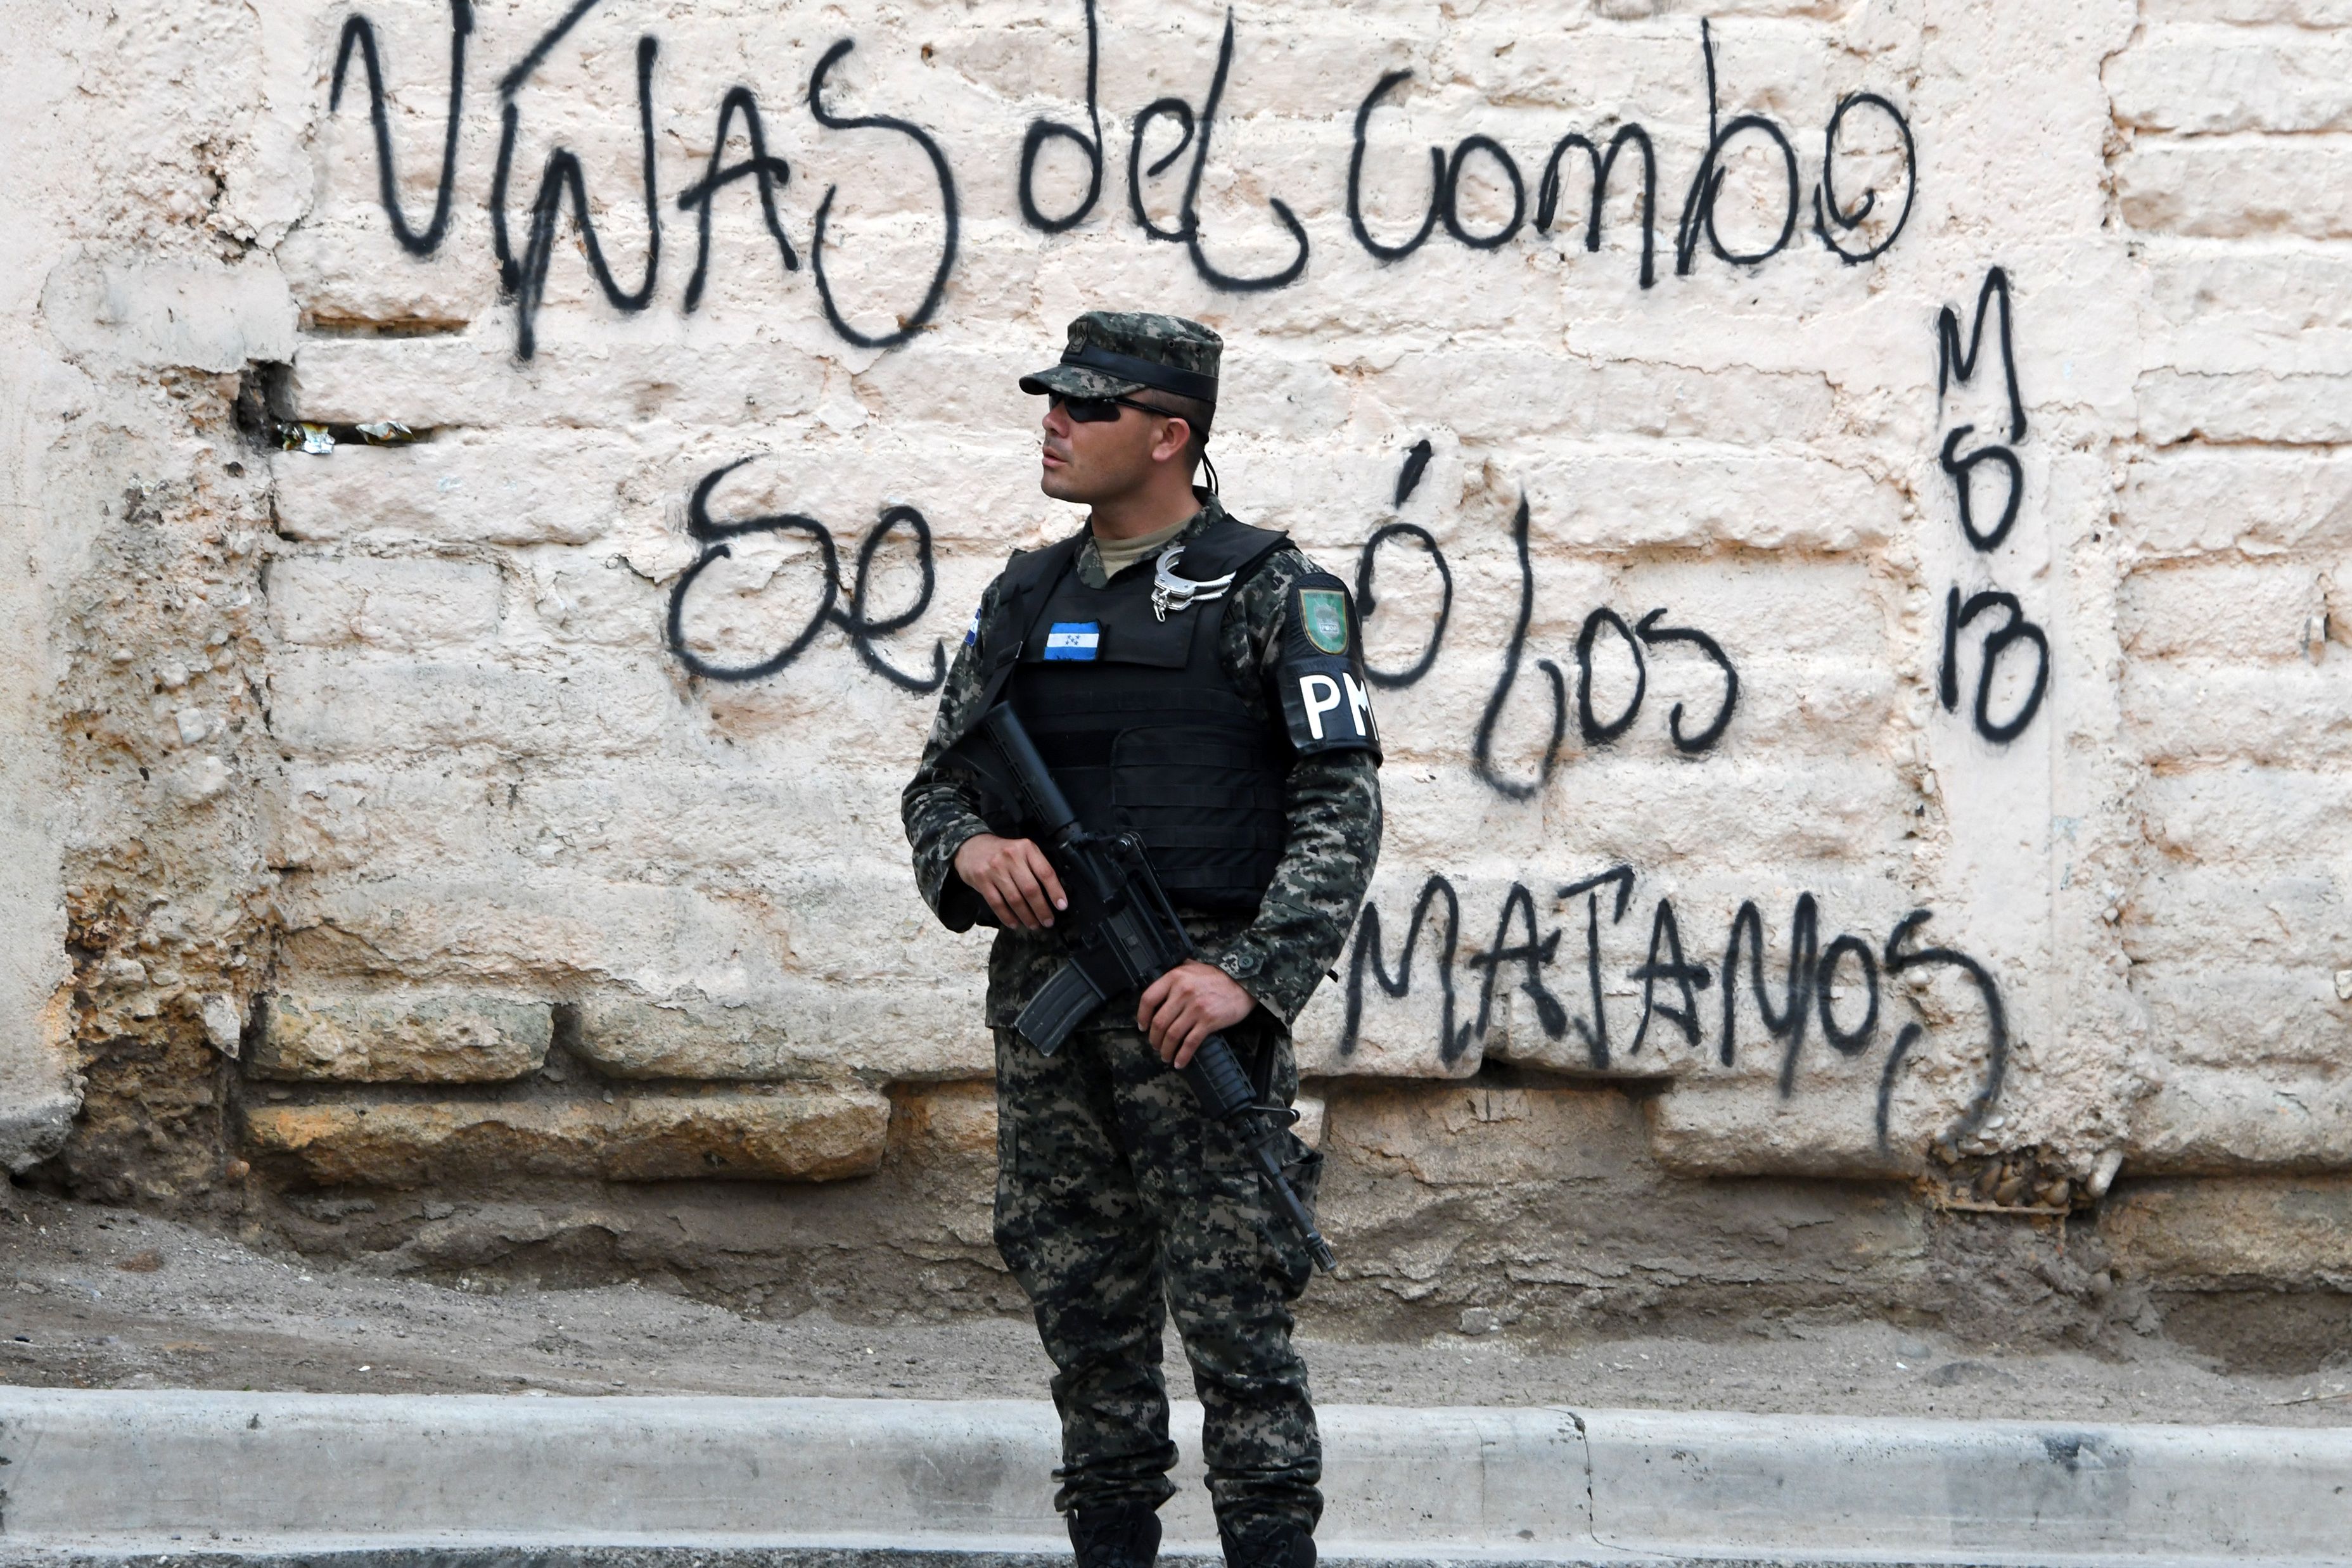 HONDURAS-VIOLENCE-GANGS